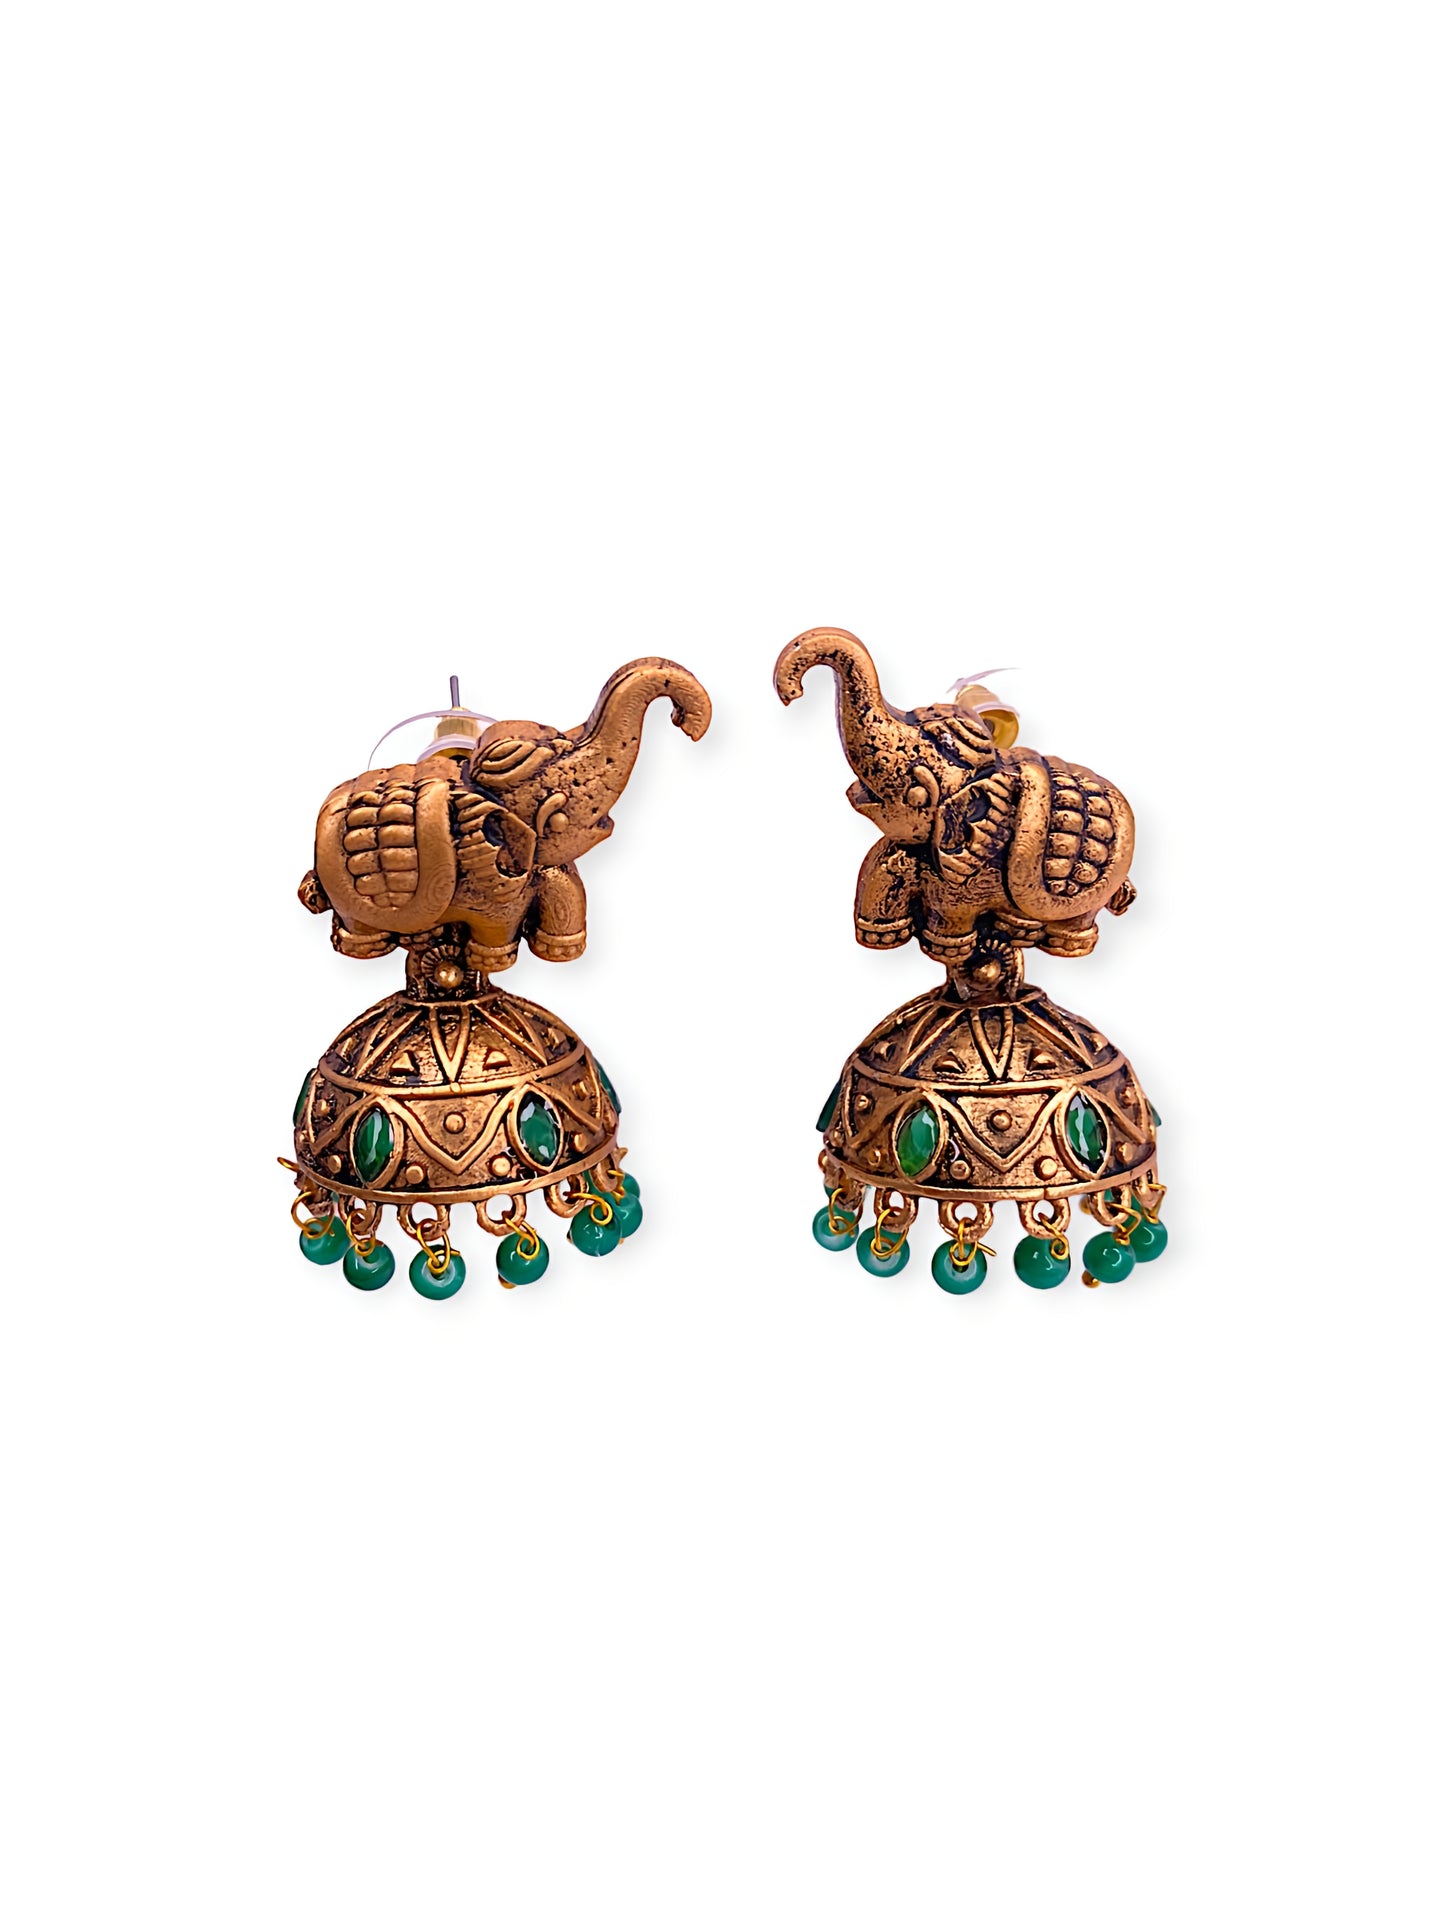 Elephant Model With Green Pearls Jhumki